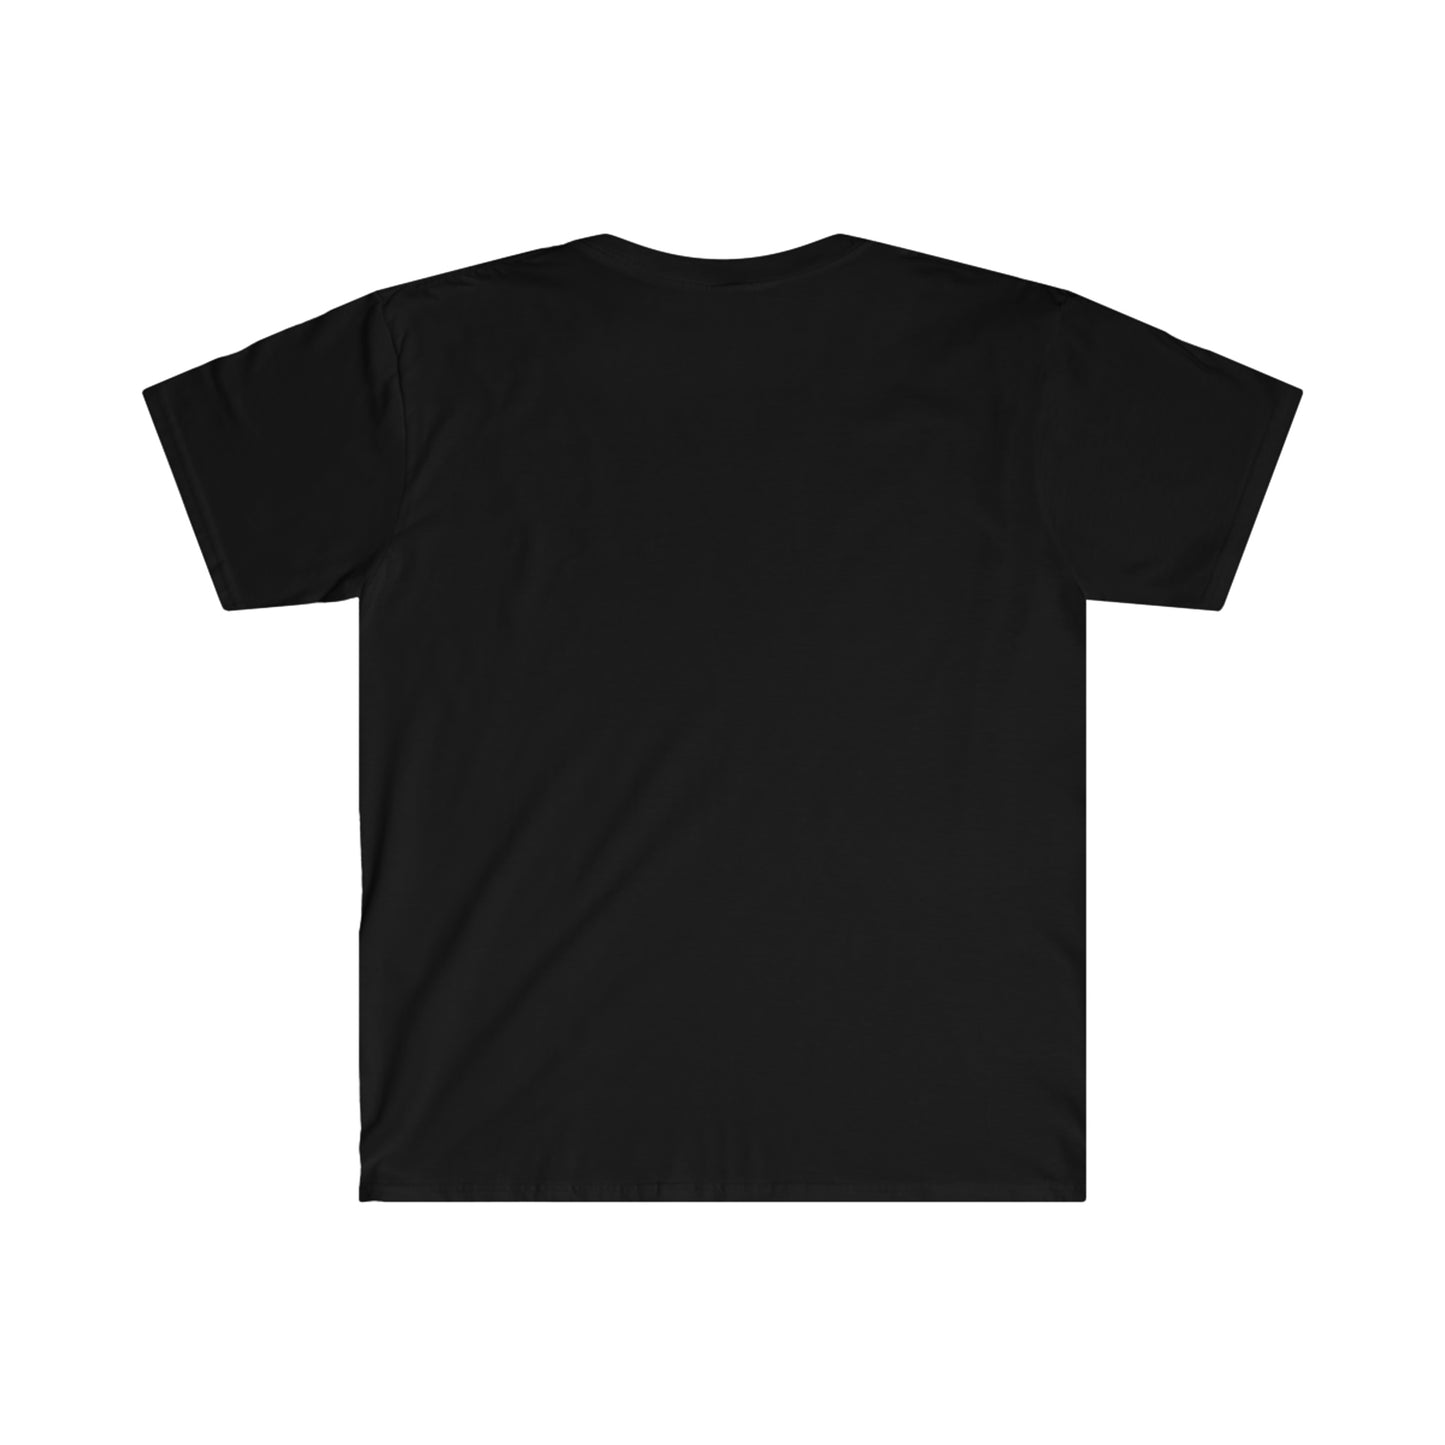 Reclaim Your Shame [Gauthism Line] Unisex Softstyle T-Shirt